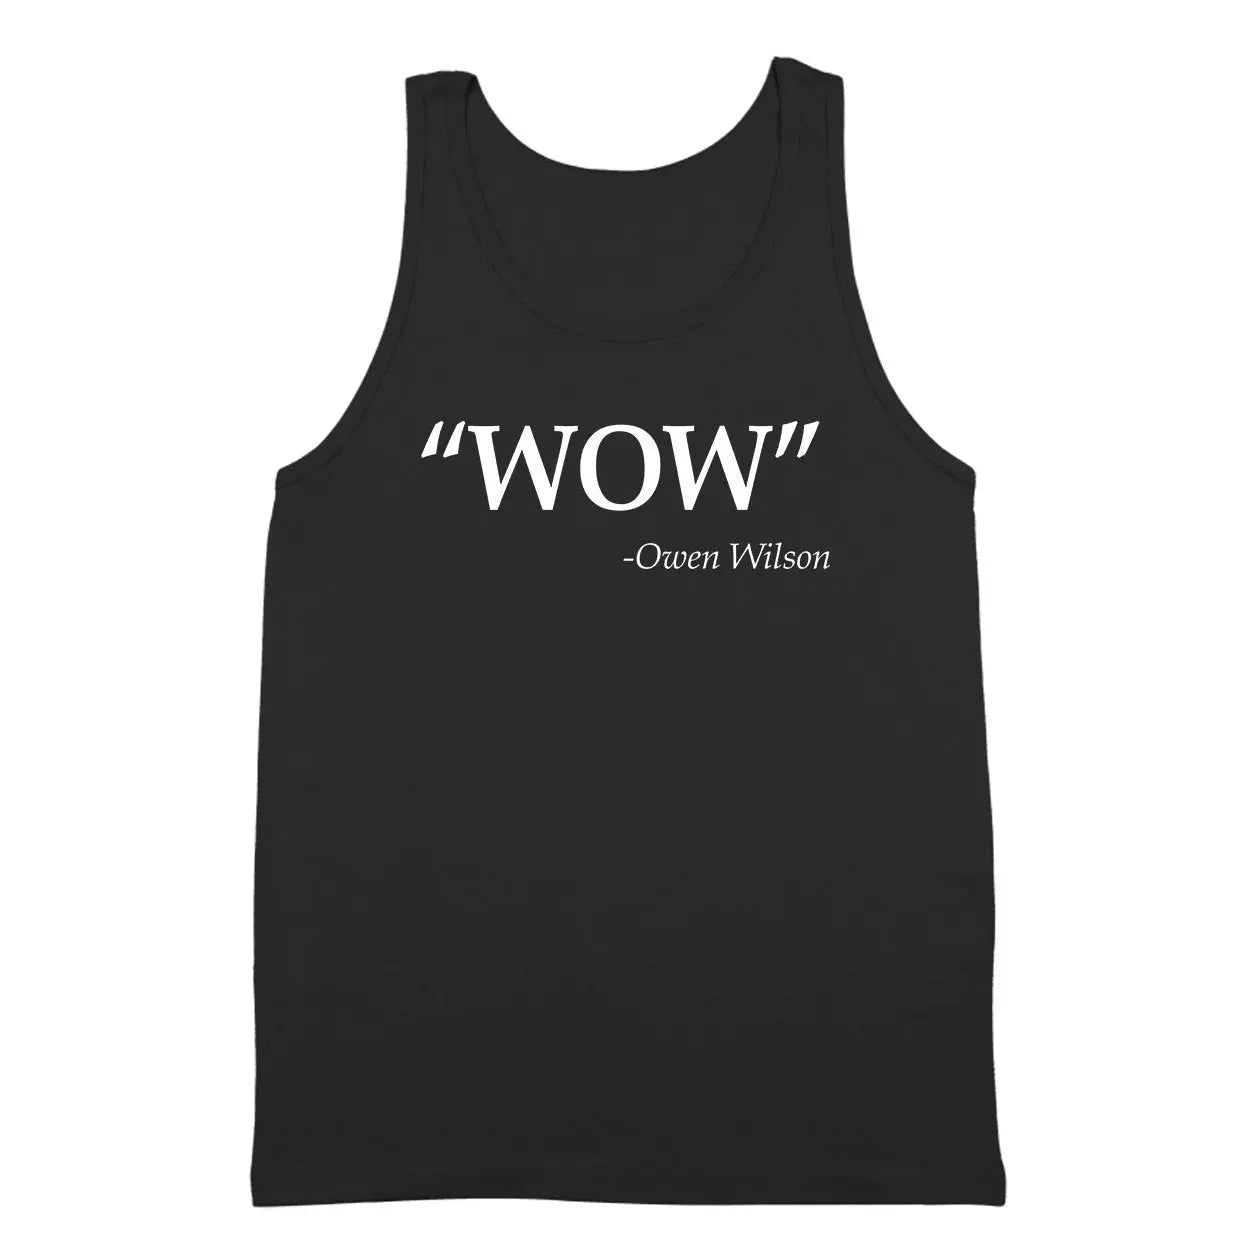 Wow Owen Wilson Quote Tshirt - Donkey Tees